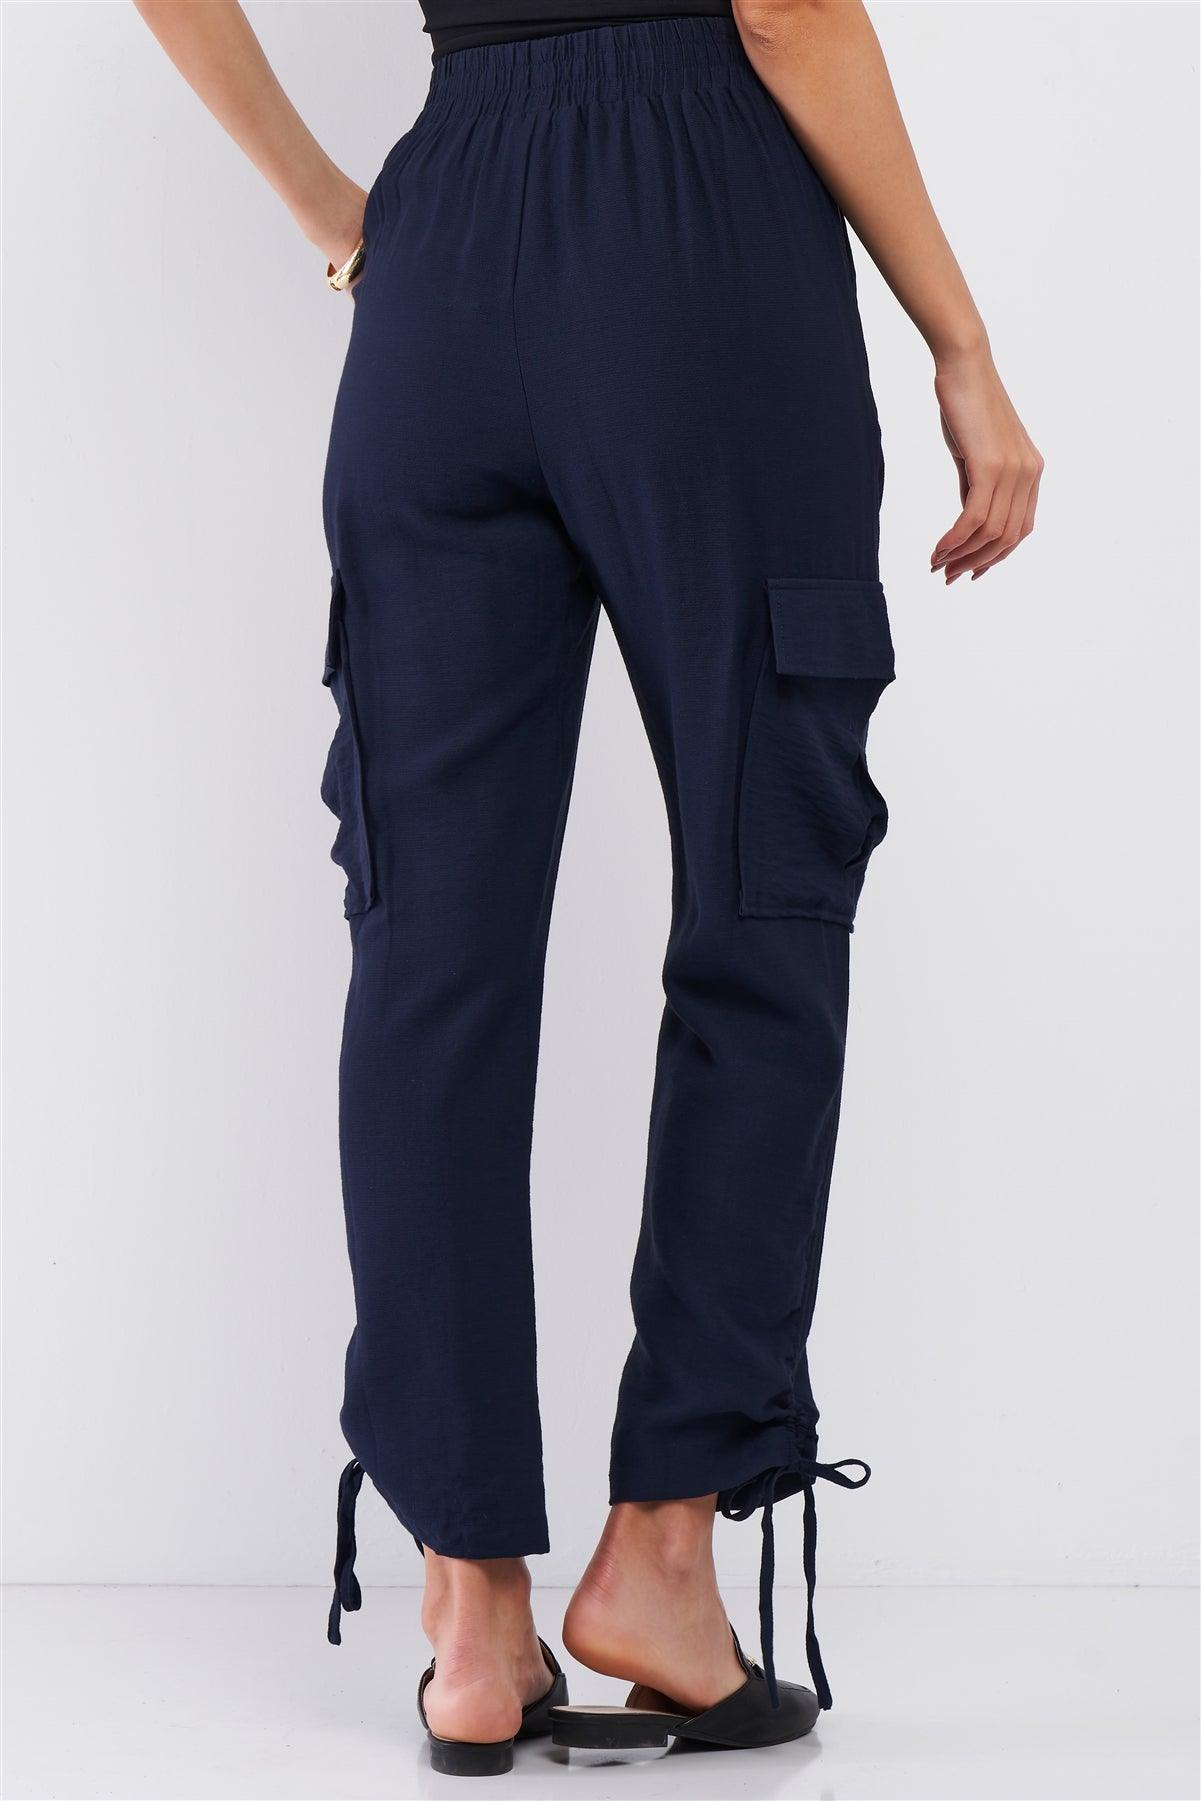 Navy Elastic Draw String Tie High Waist Two Side Leg Pockets Self-Tie Bottom Drawstring Jogger Pants /1-2-2